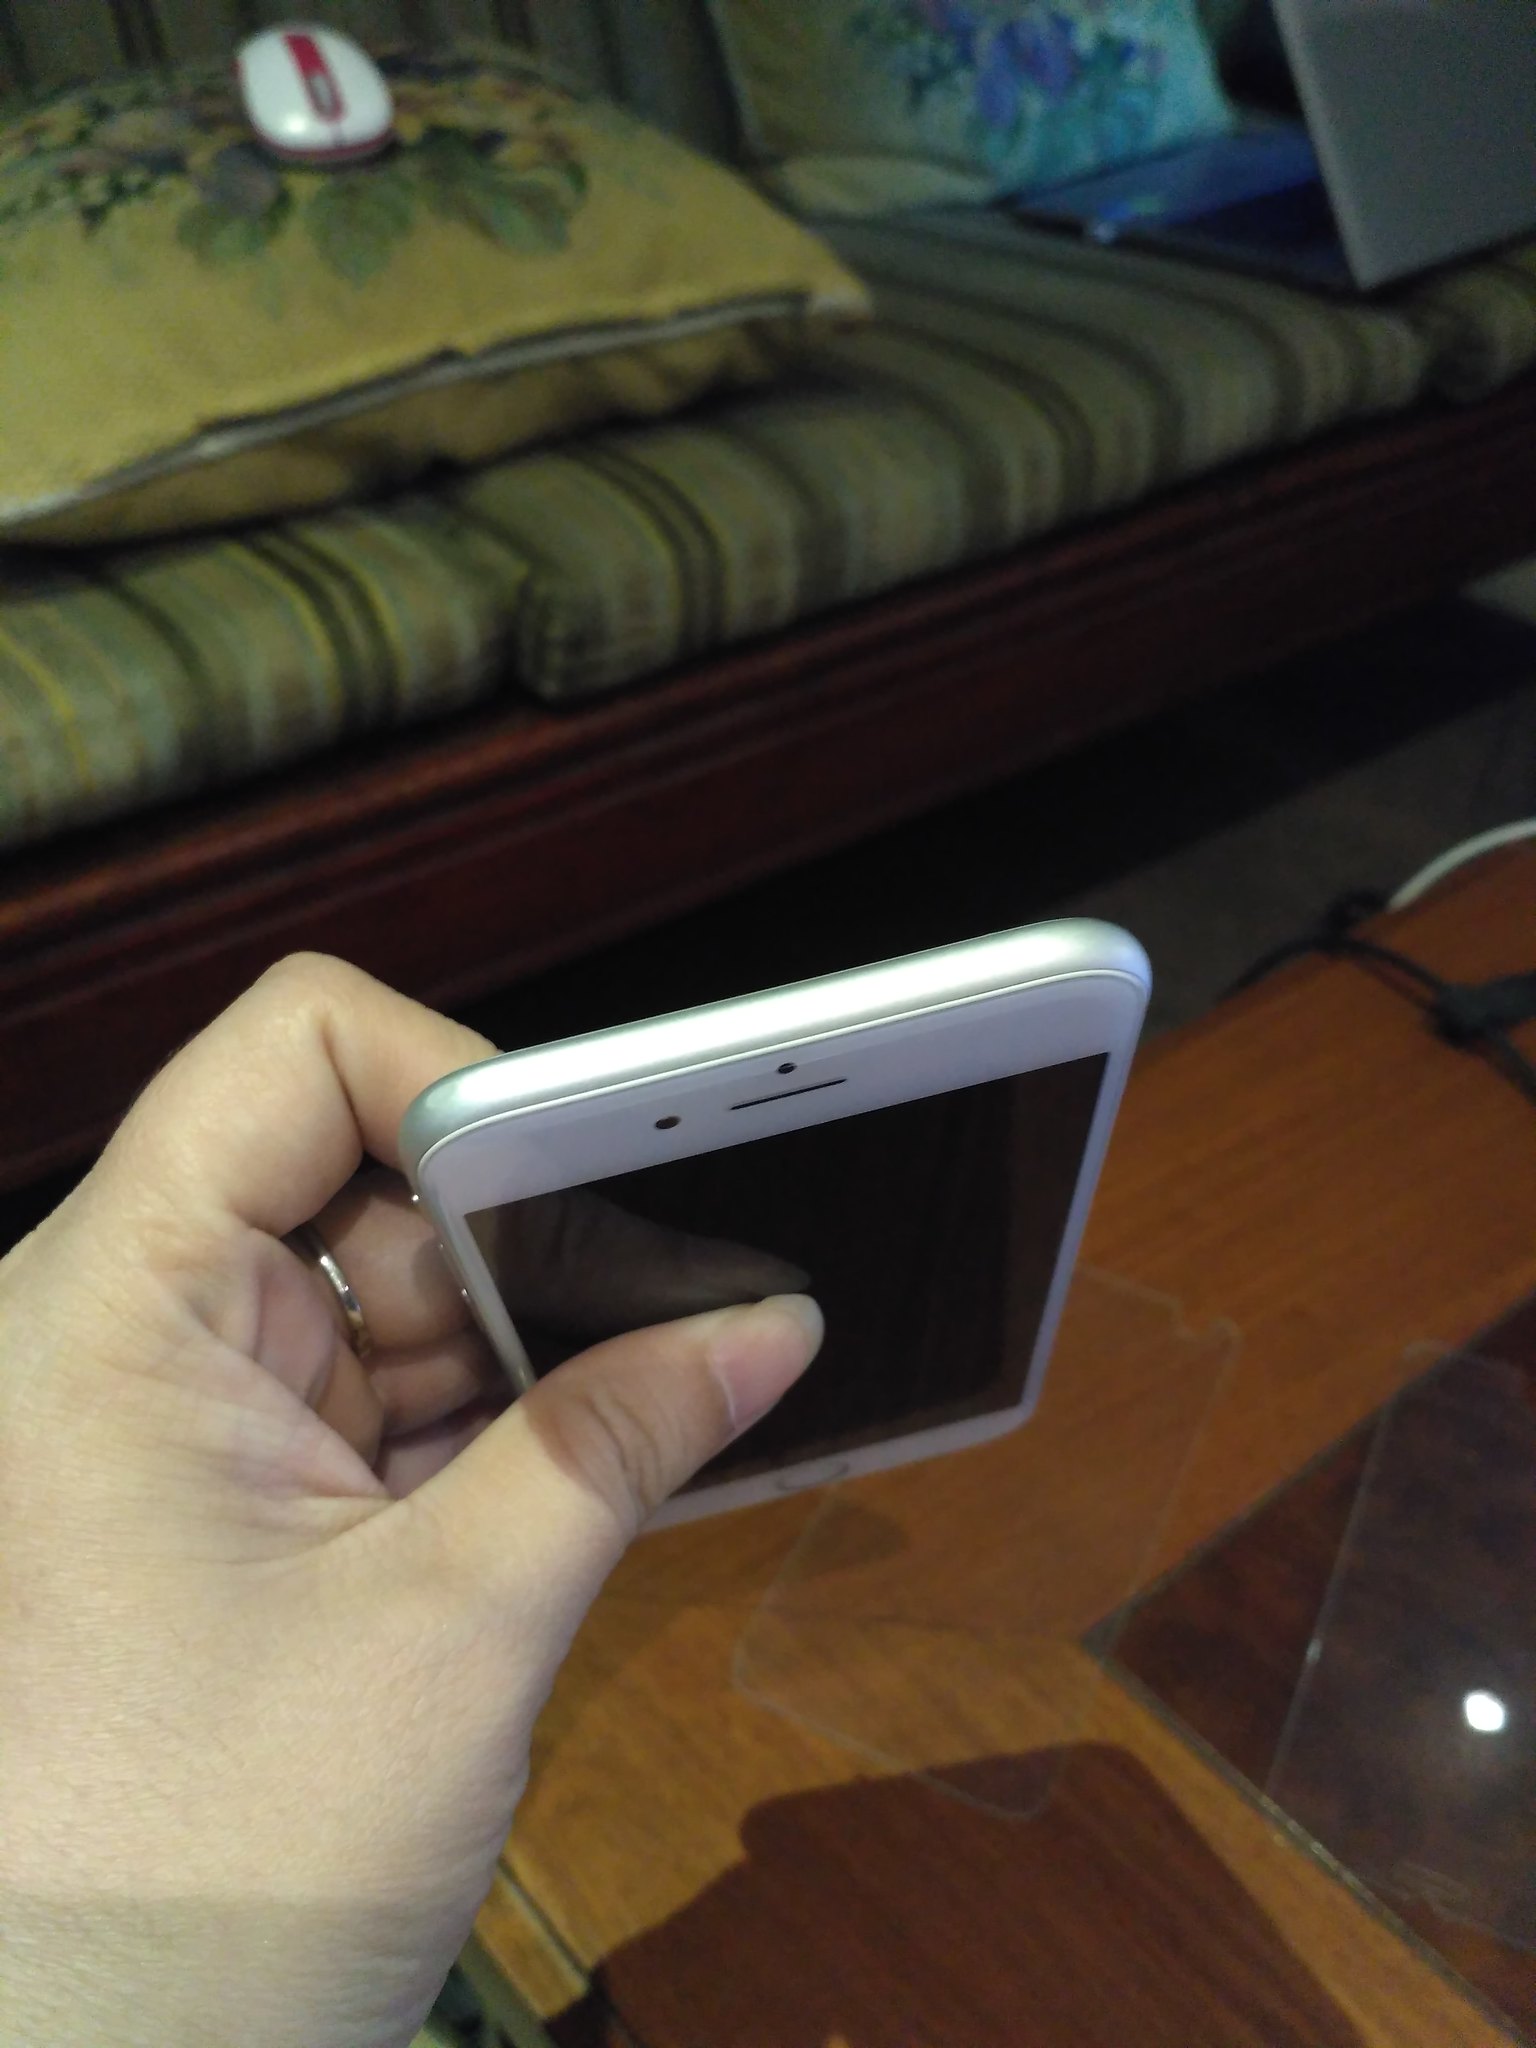 iPhone 6 64GB Silver Quốc tế, fullbox, máy đẹp, giá tốt - 3